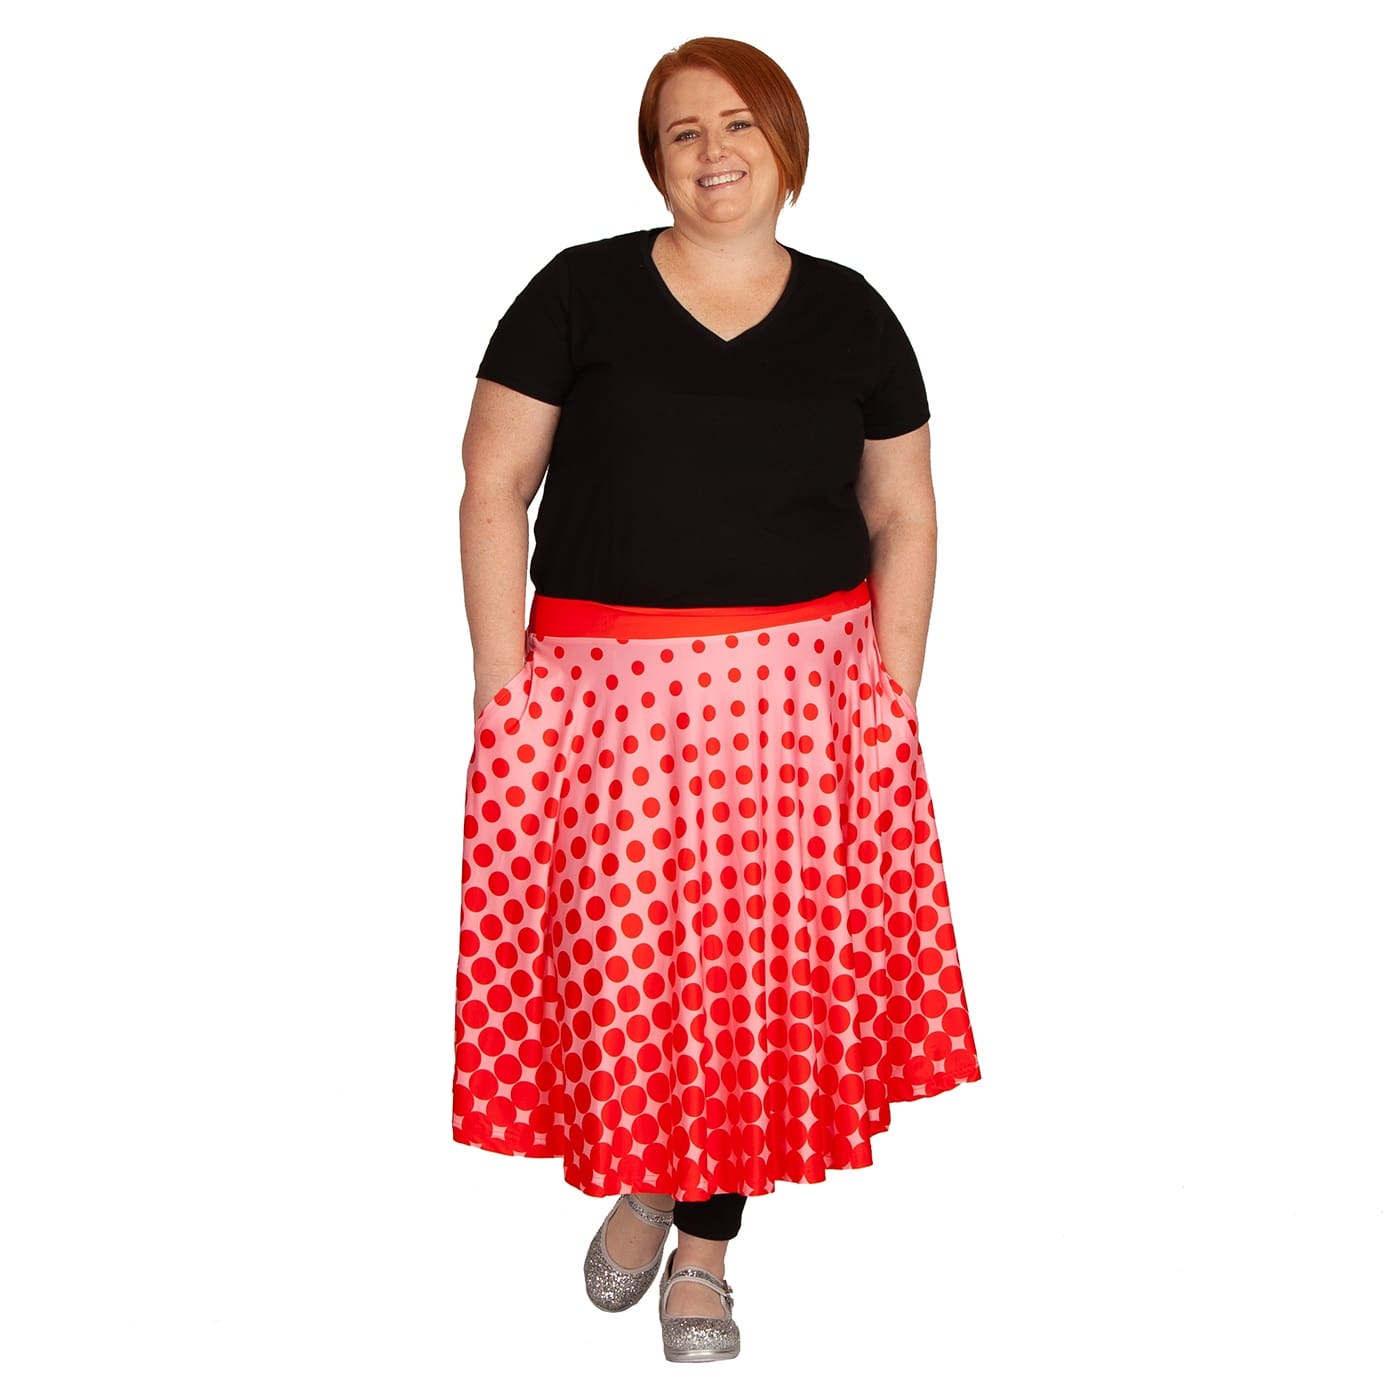 Blush Swishy Skirt by RainbowsAndFairies.com.au (Pink & Red - Polka Dot - Spots - Kitsch - Circle Skirt With Pockets - Mod Retro) - SKU: CL_SWISH_BLUSH_ORG - Pic-07